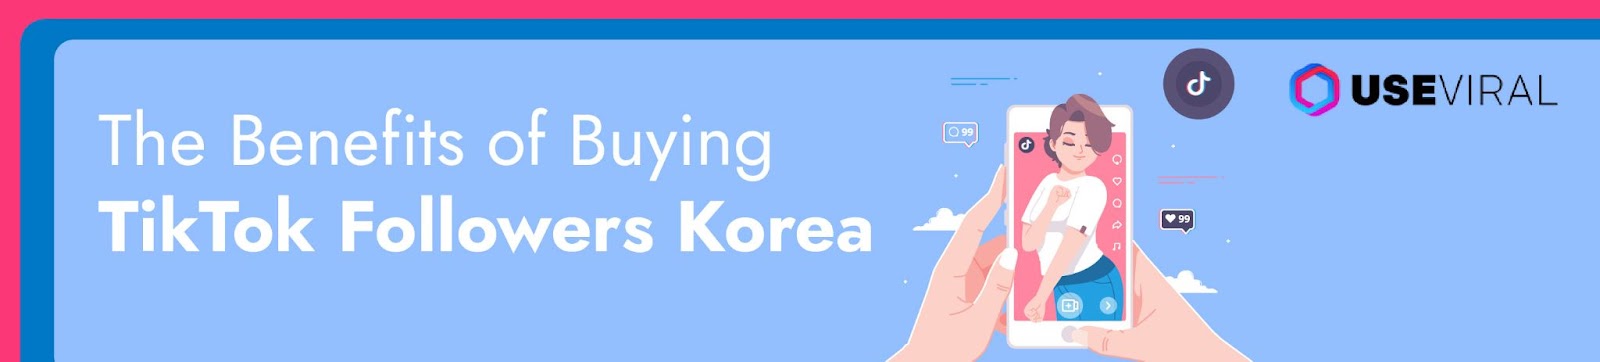 The Benefits of Buying TikTok Followers Korea